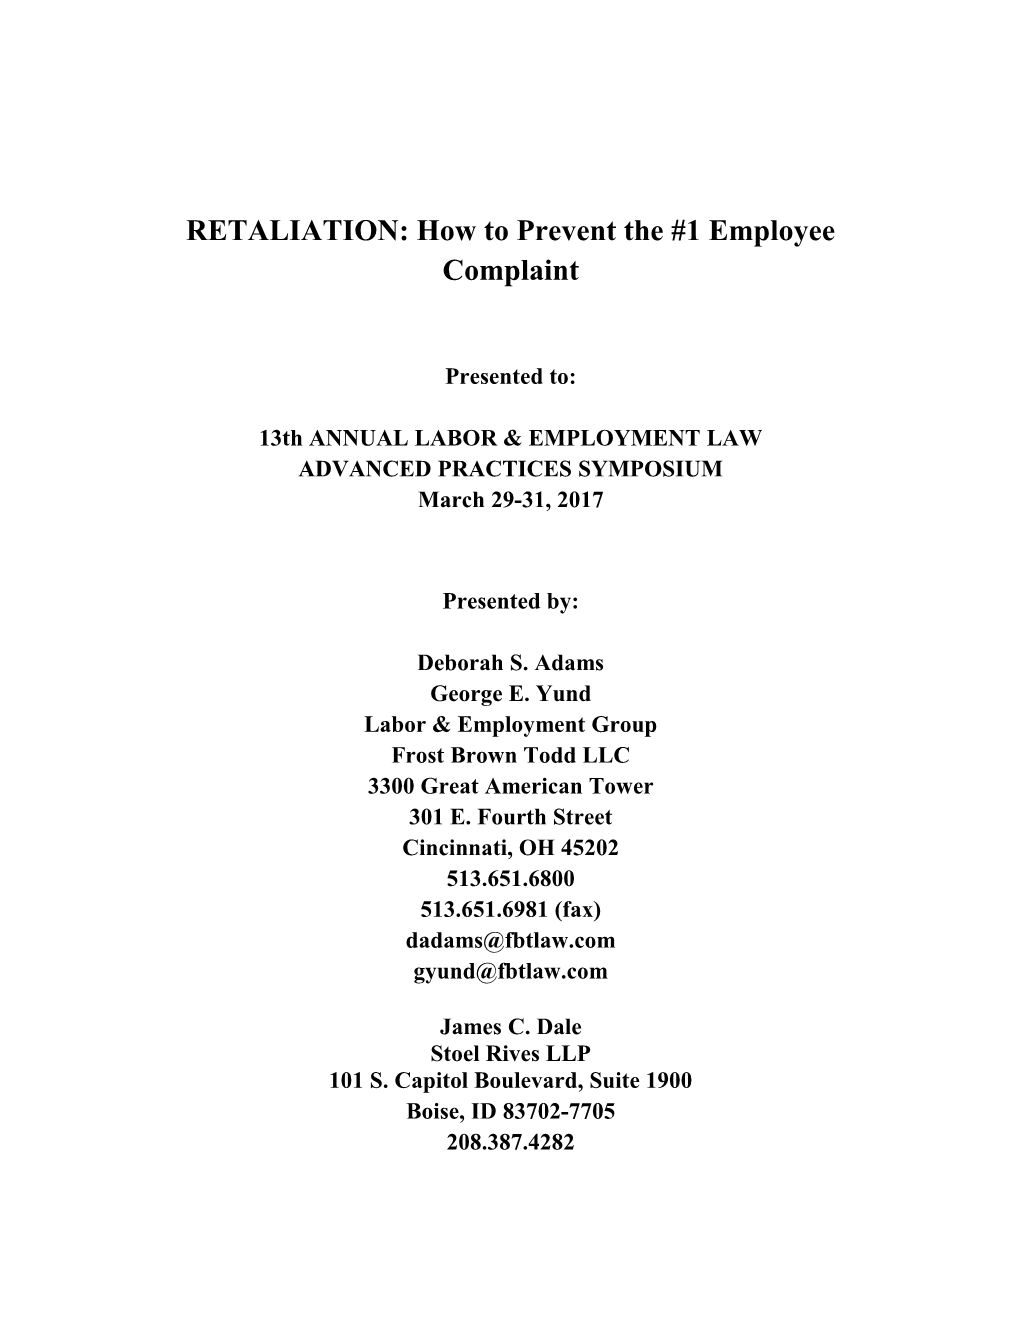 RETALIATION: How to Prevent the #1 Employee Complaint